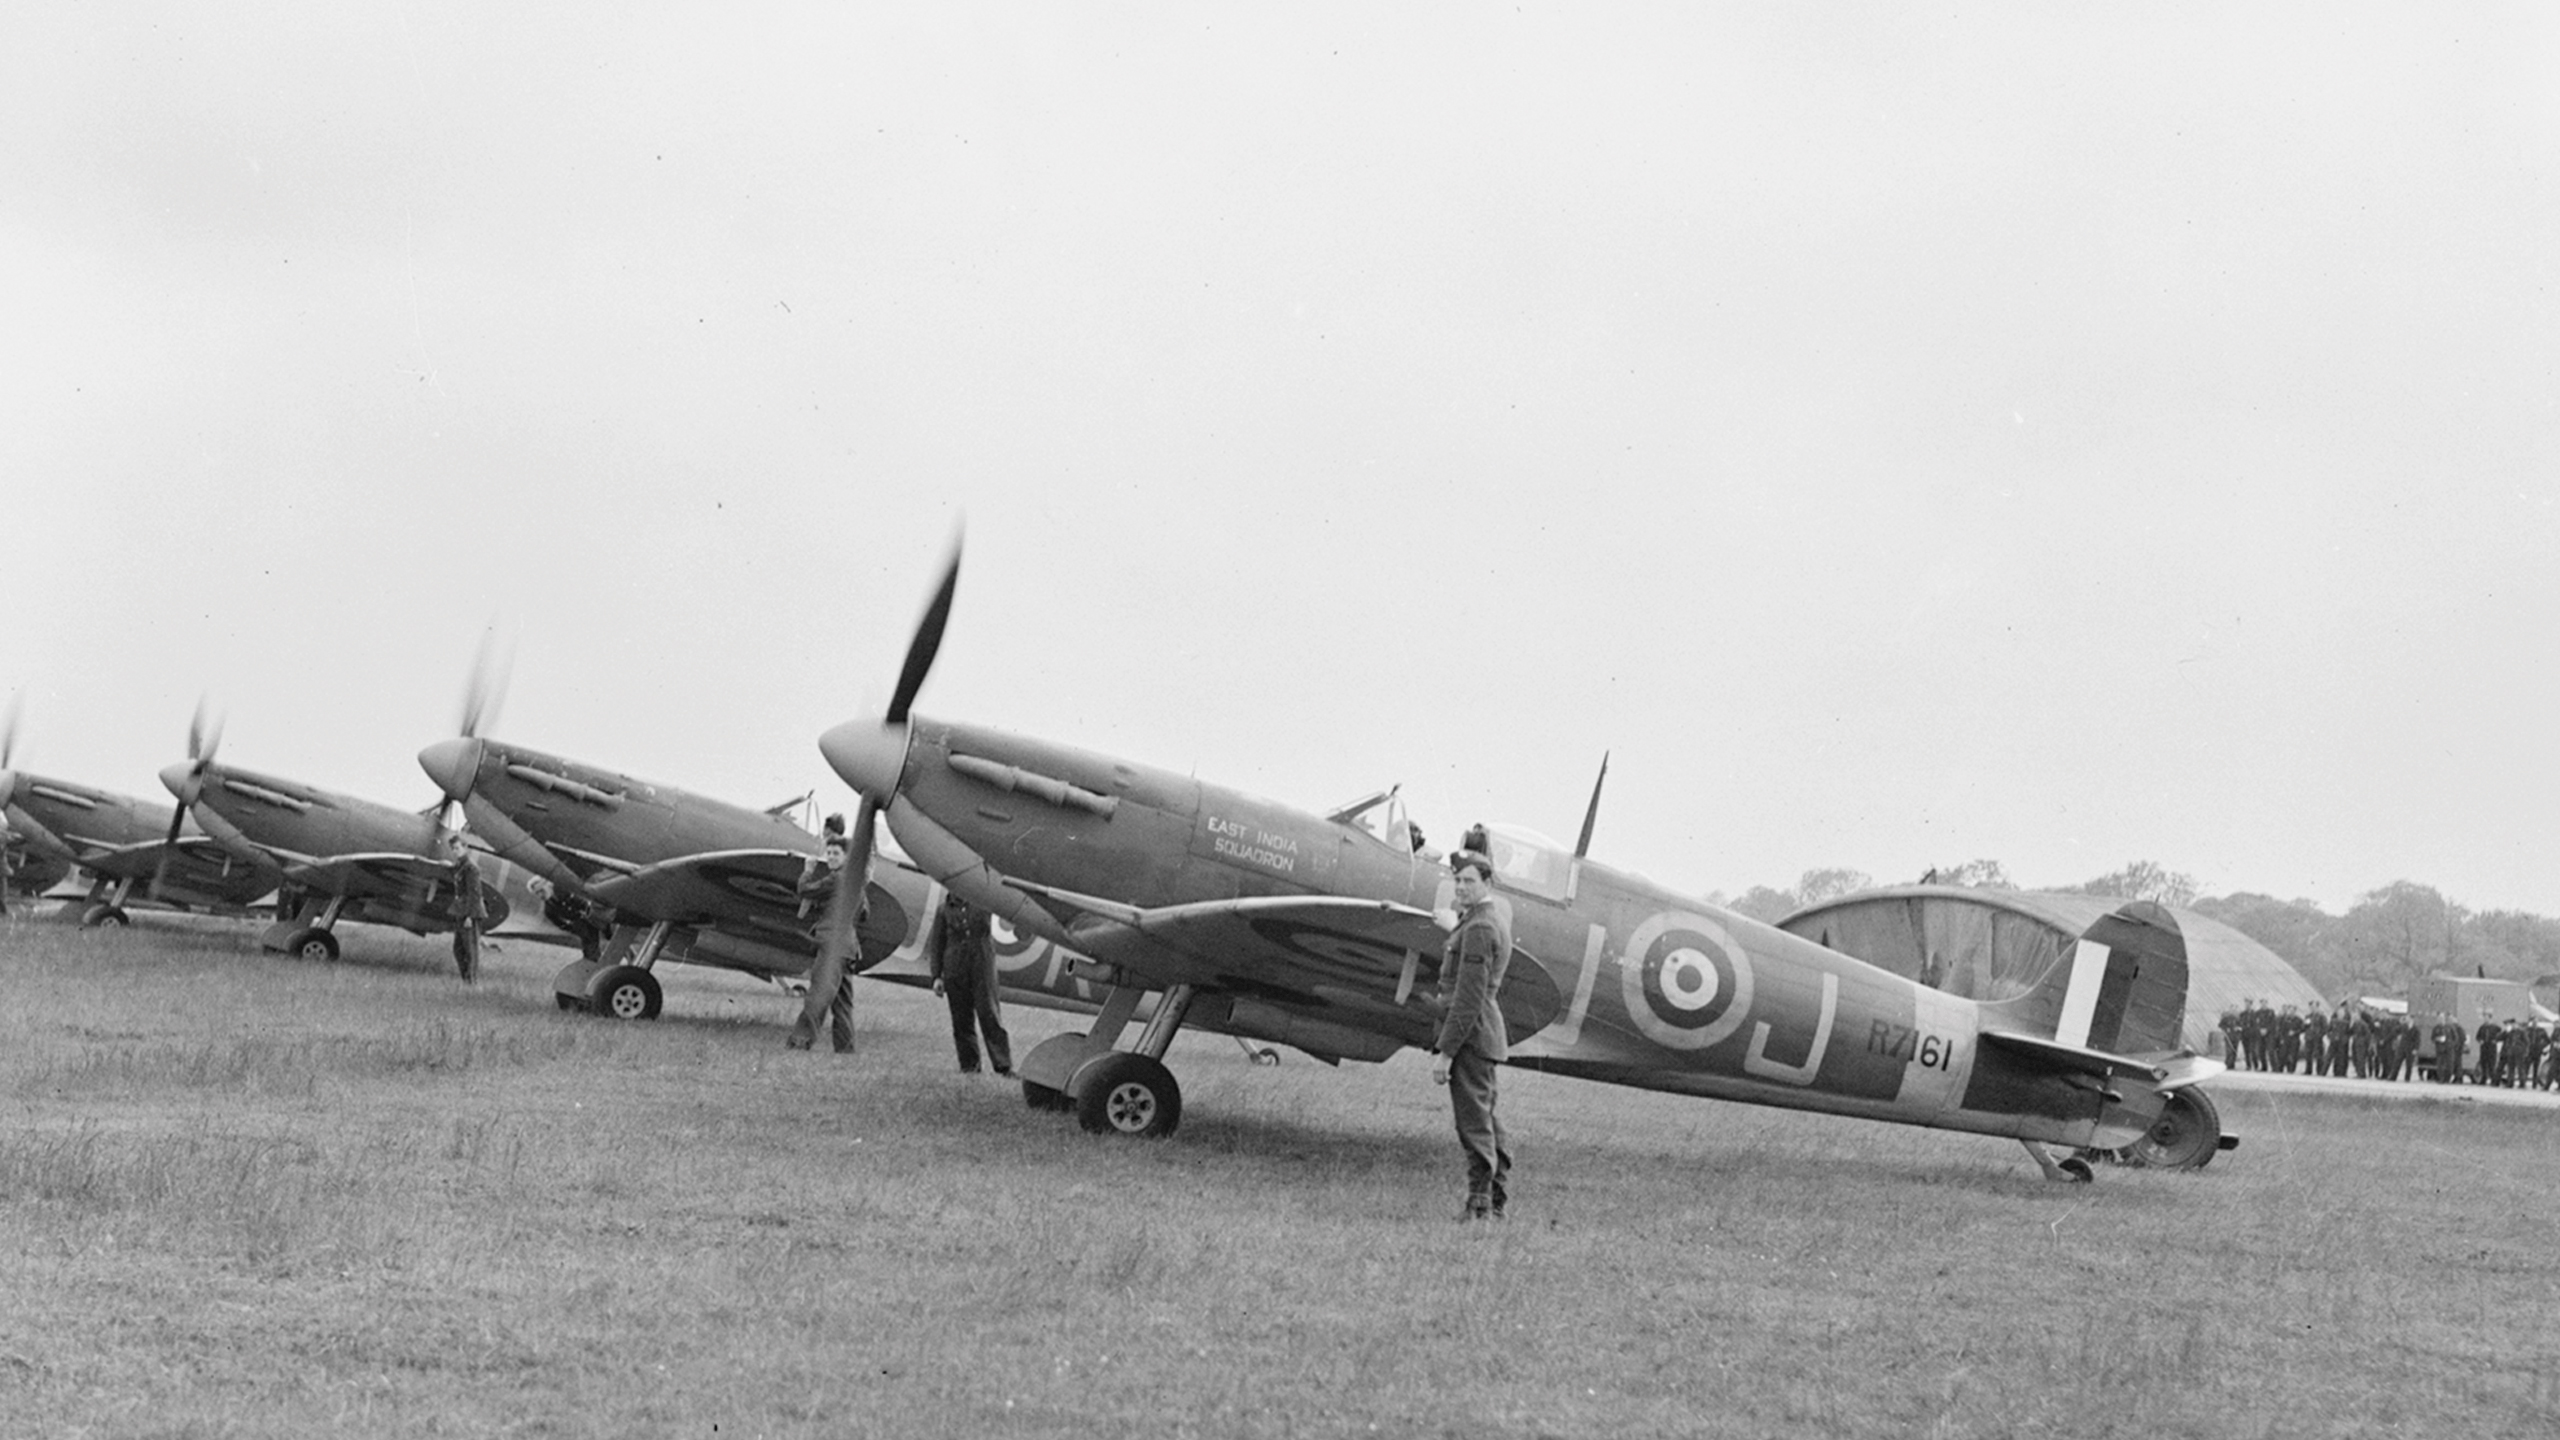 RAFA - Making a solemn pledge. Black and white photo of a group of veteran RAF pilots surroundoing a Spitfire plane.